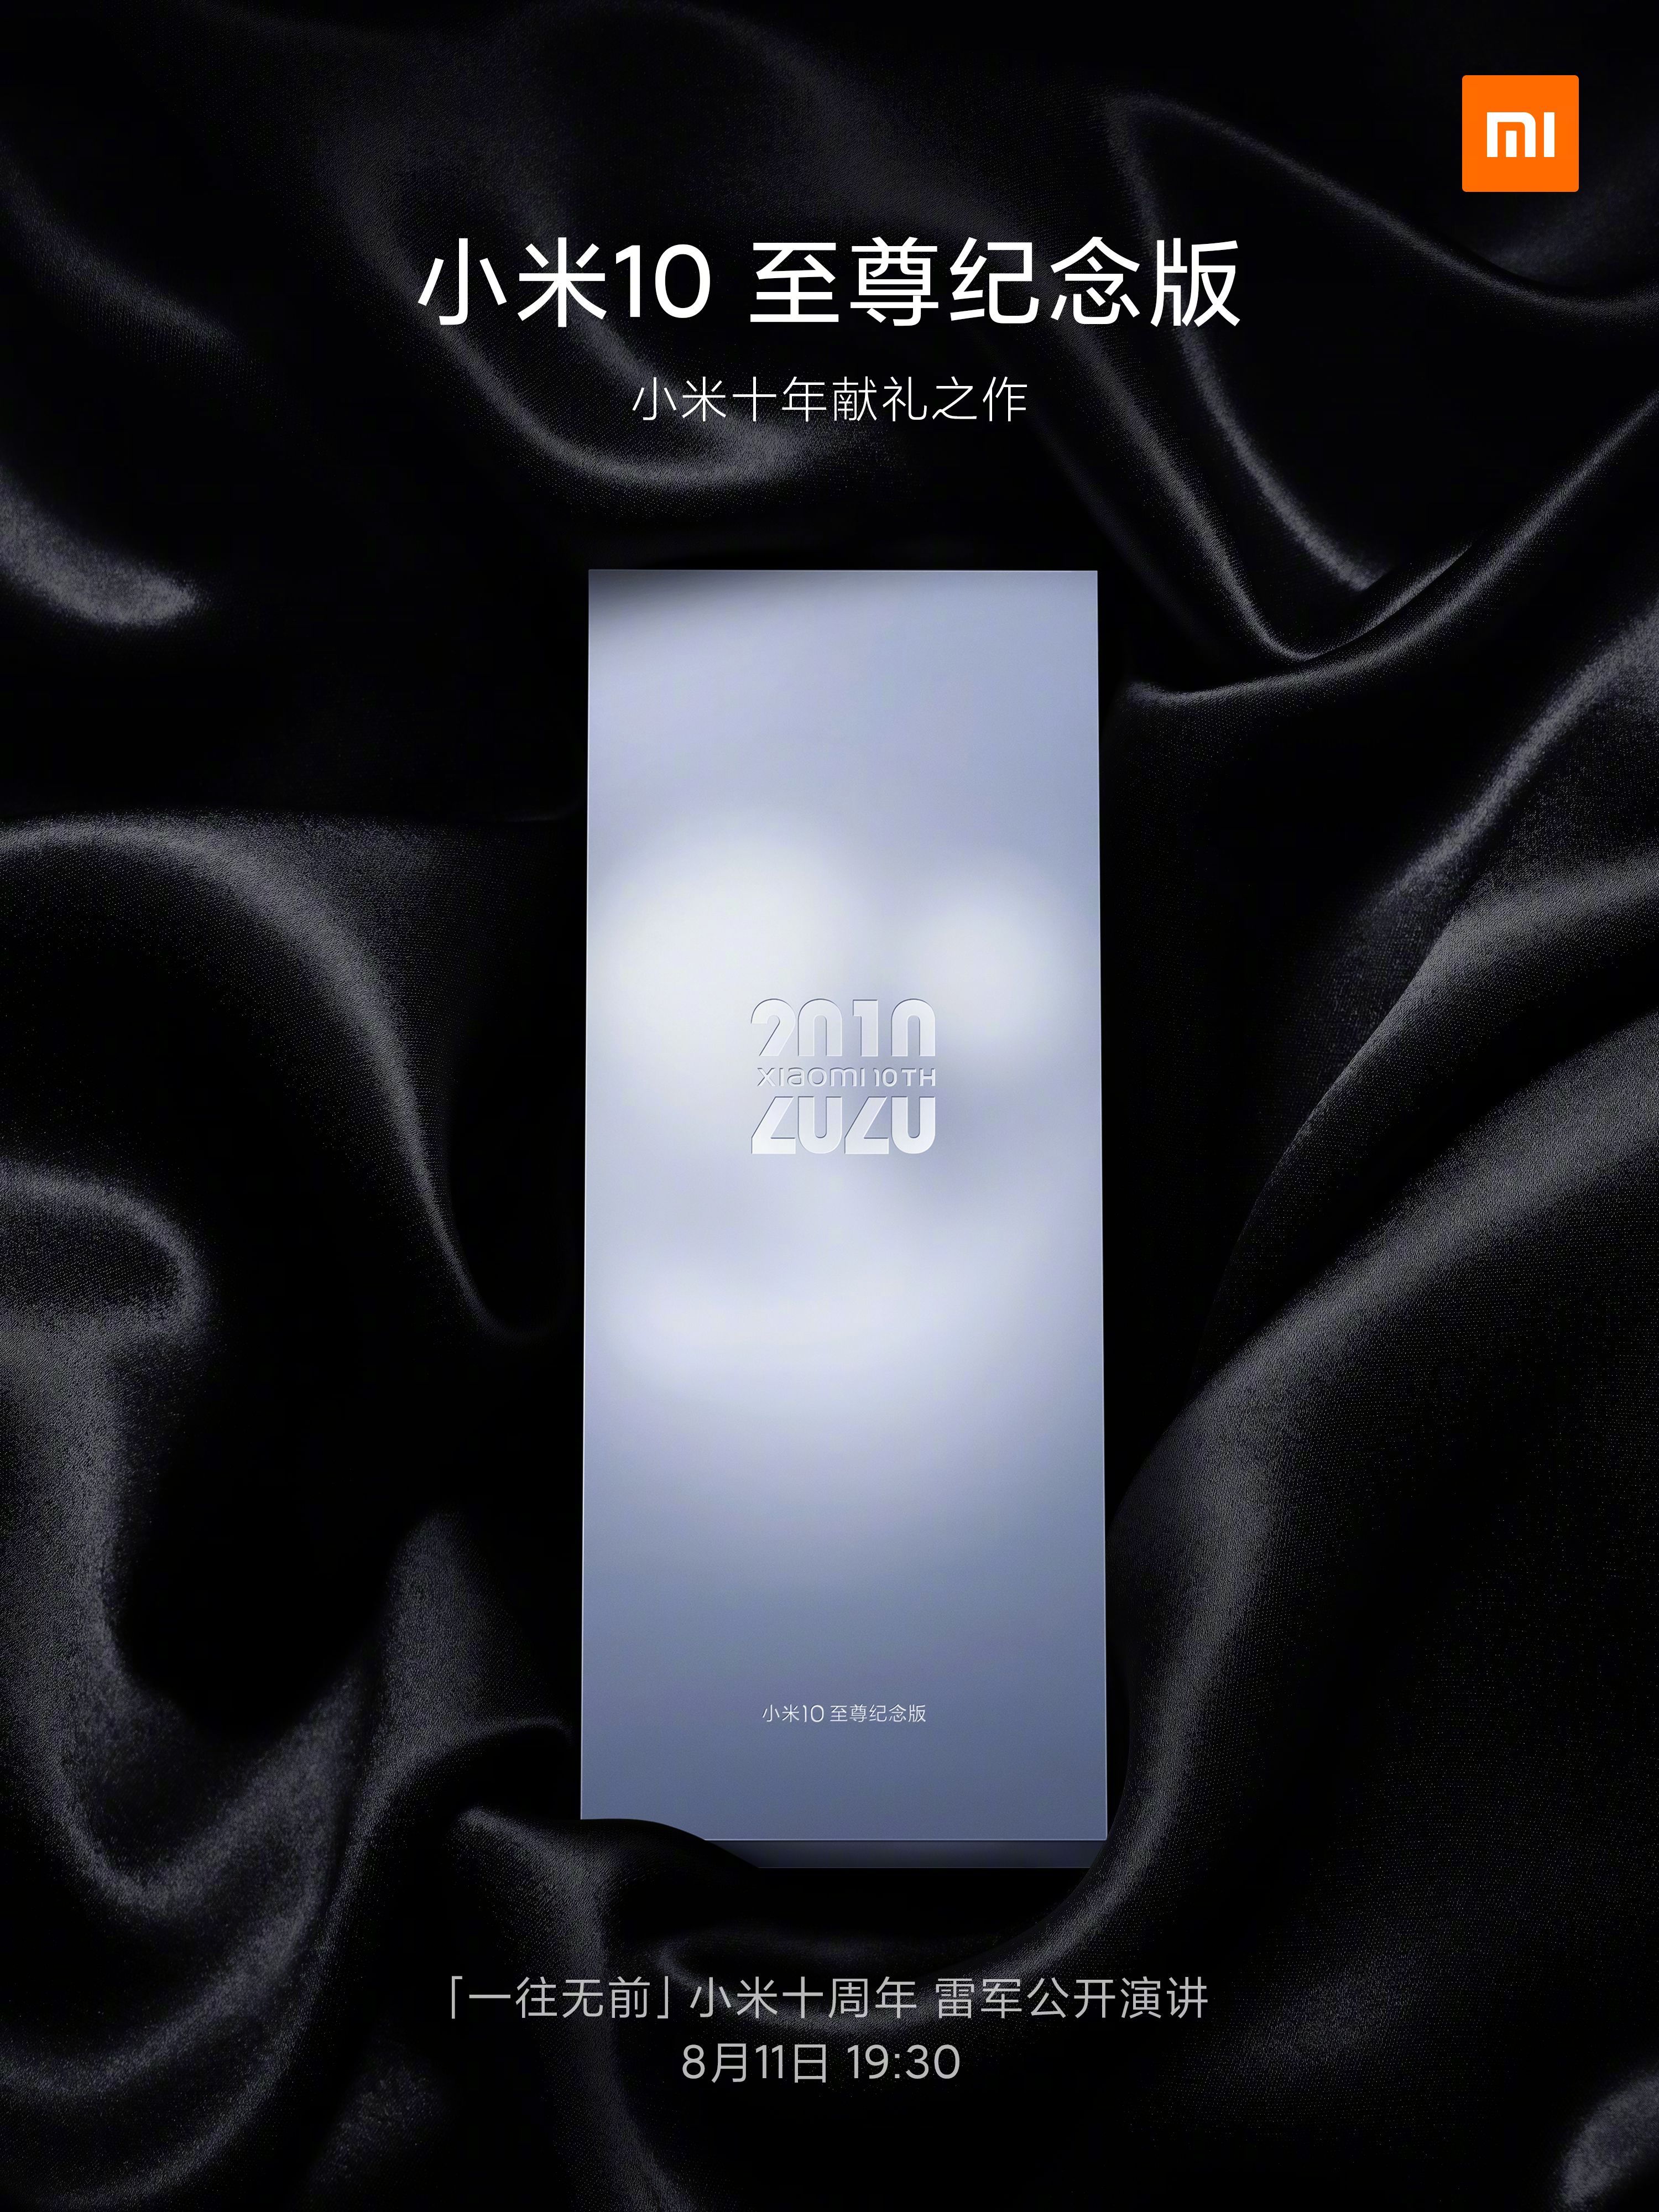 Xiaomi Mi 10 Extreme Commemorative Edition August 11 Launch